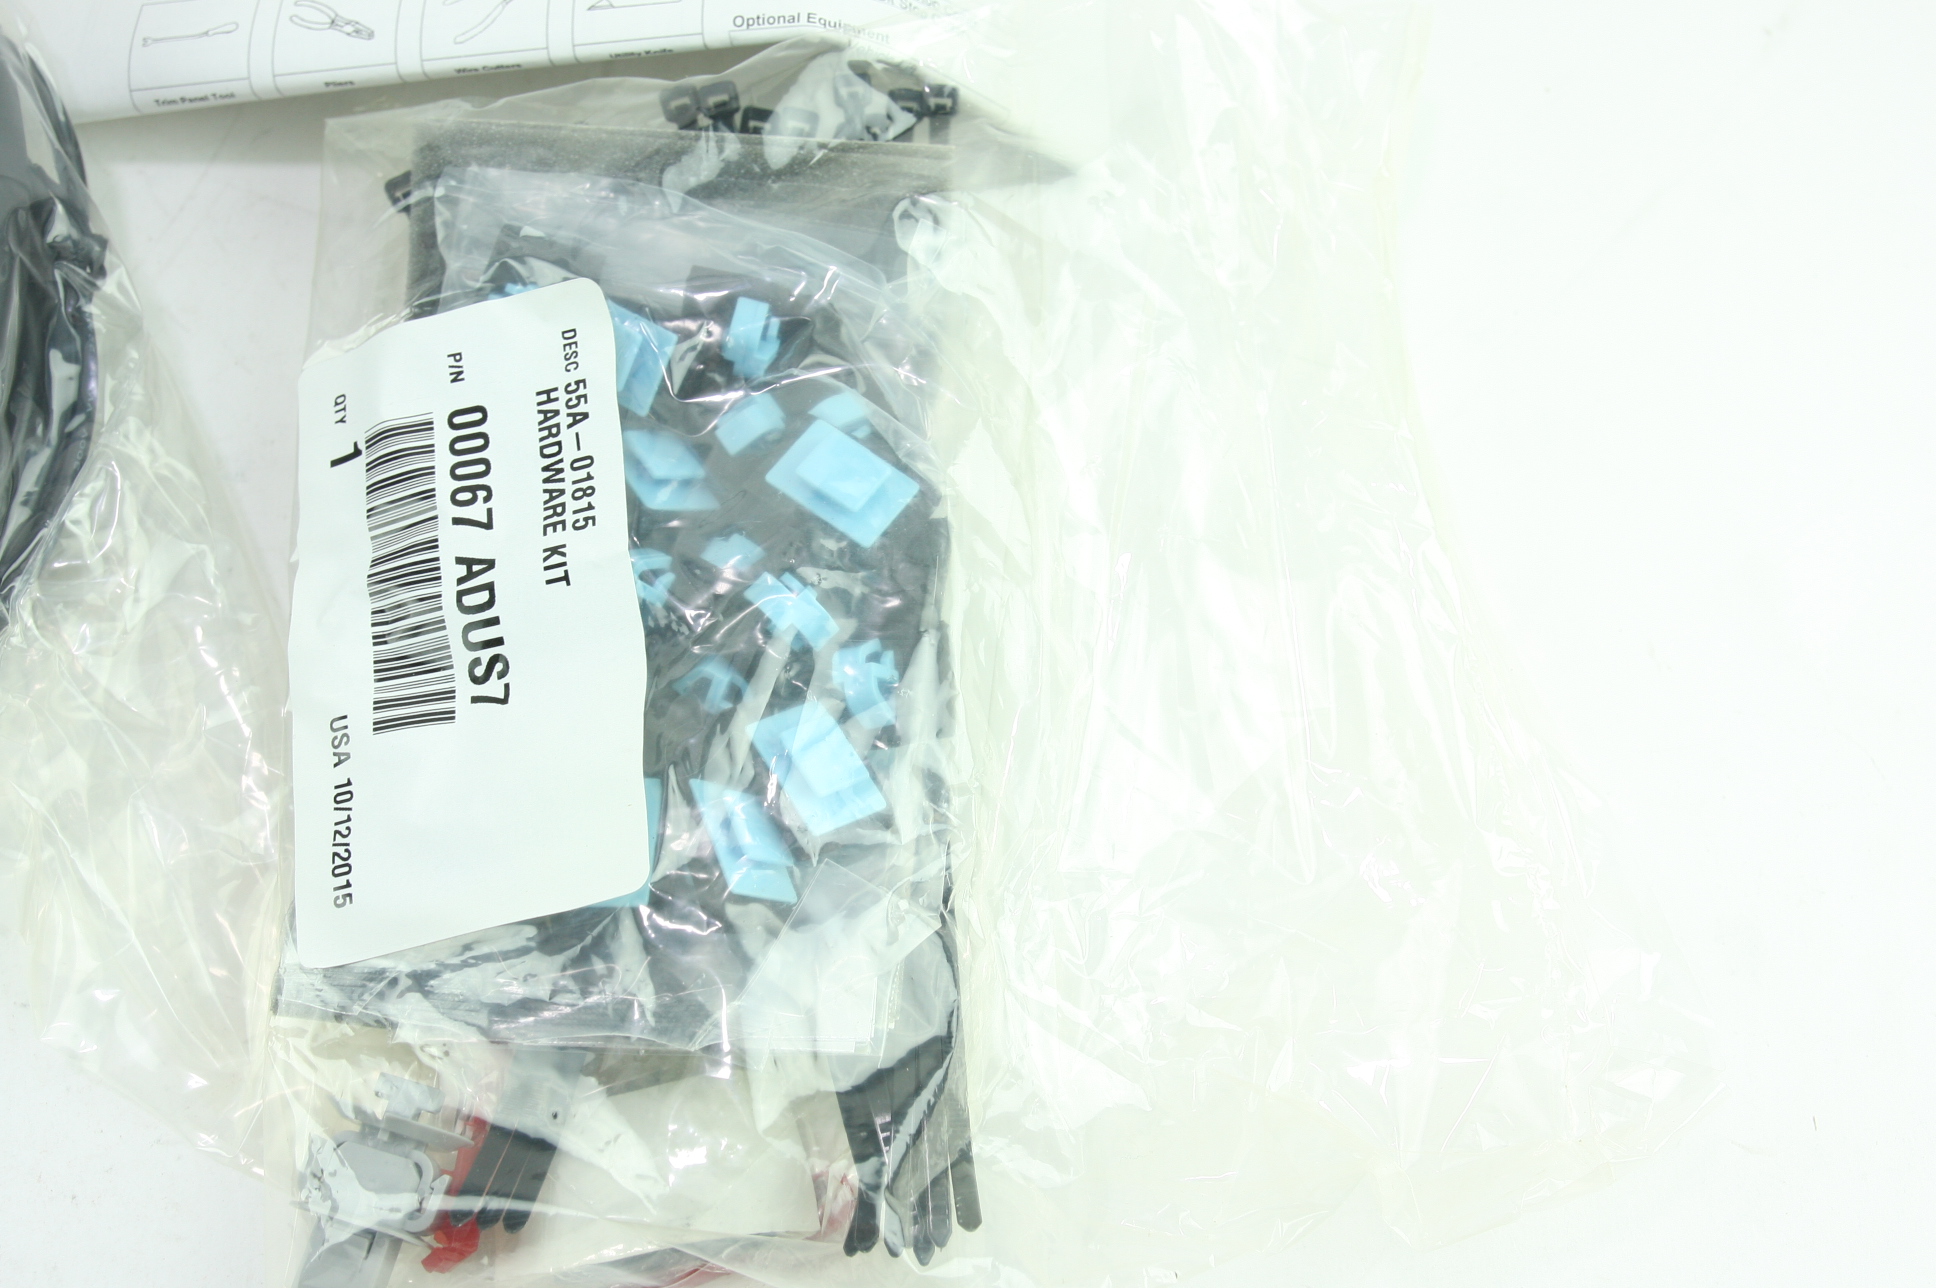 ** Genuine Kia 14-19 Soul Exterior LED Lighting Kit New OEM Packaging B2067ADU01 - image 10